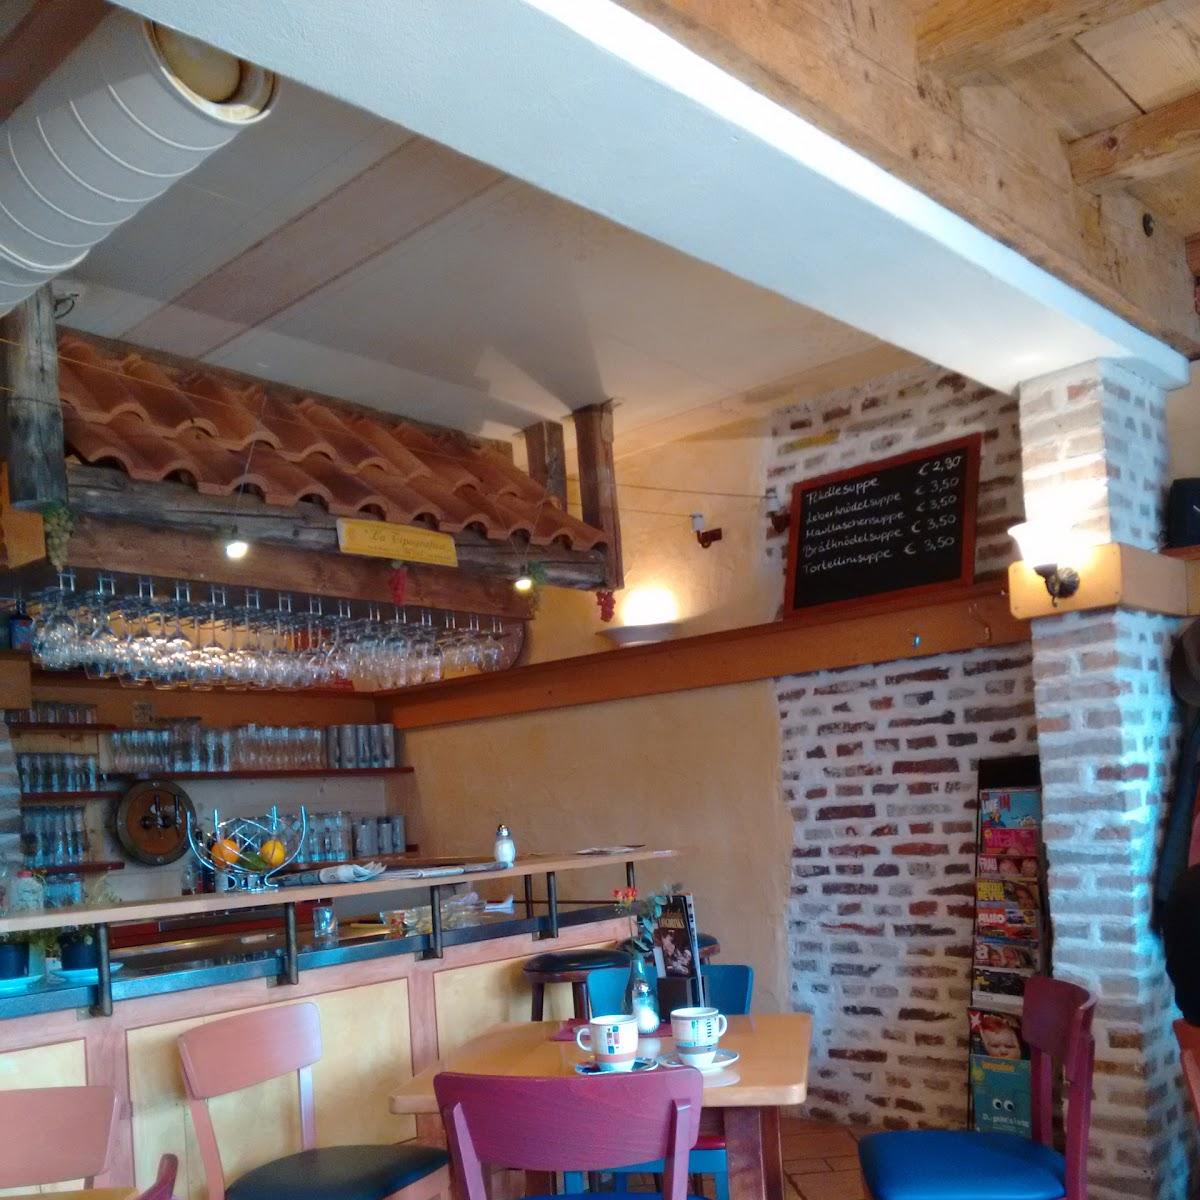 Restaurant "Cafe Morizz" in Buchloe